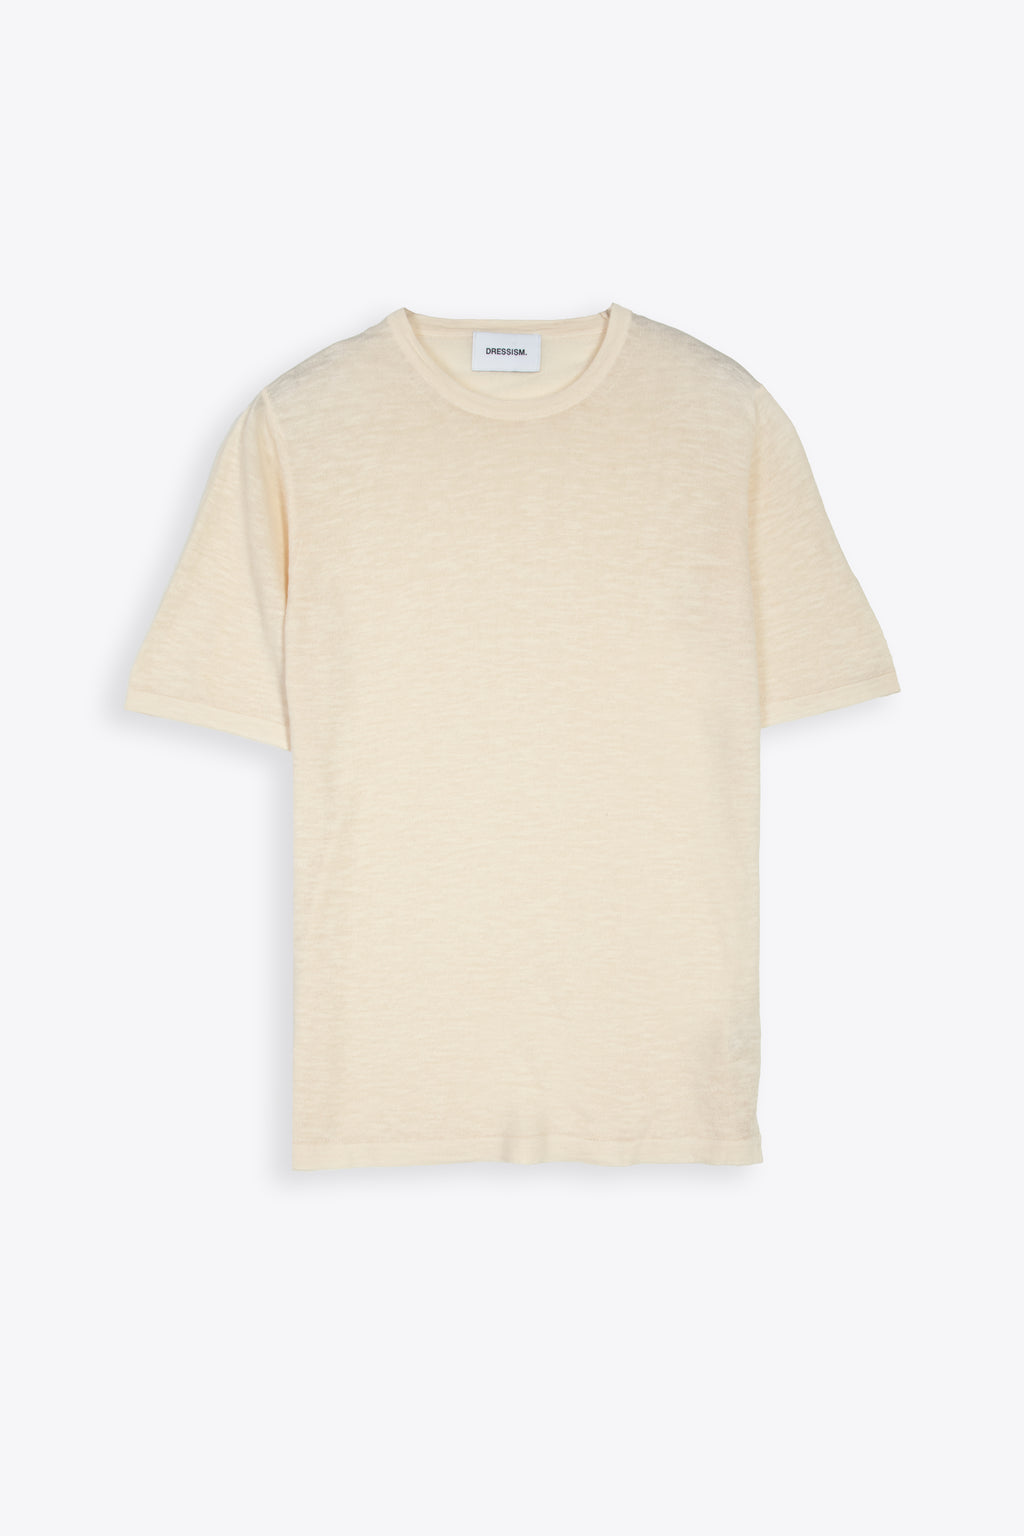 alt-image__Off-white-linen-blend-t-shirt